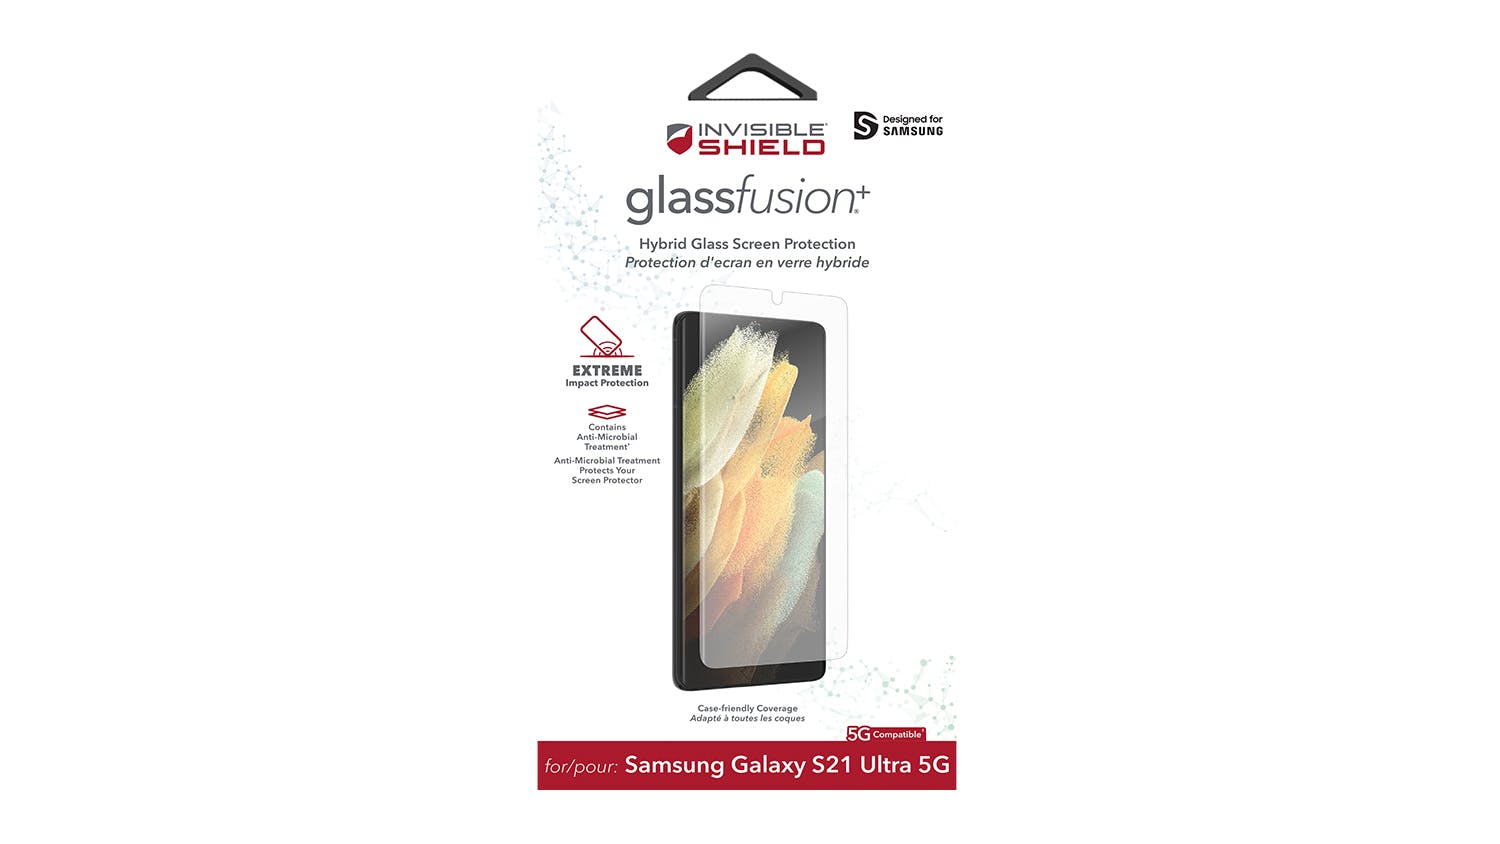 Zagg InvisibleShield GlassFusion+ Screen Protector for Samsung Galaxy S21 Ultra 5G